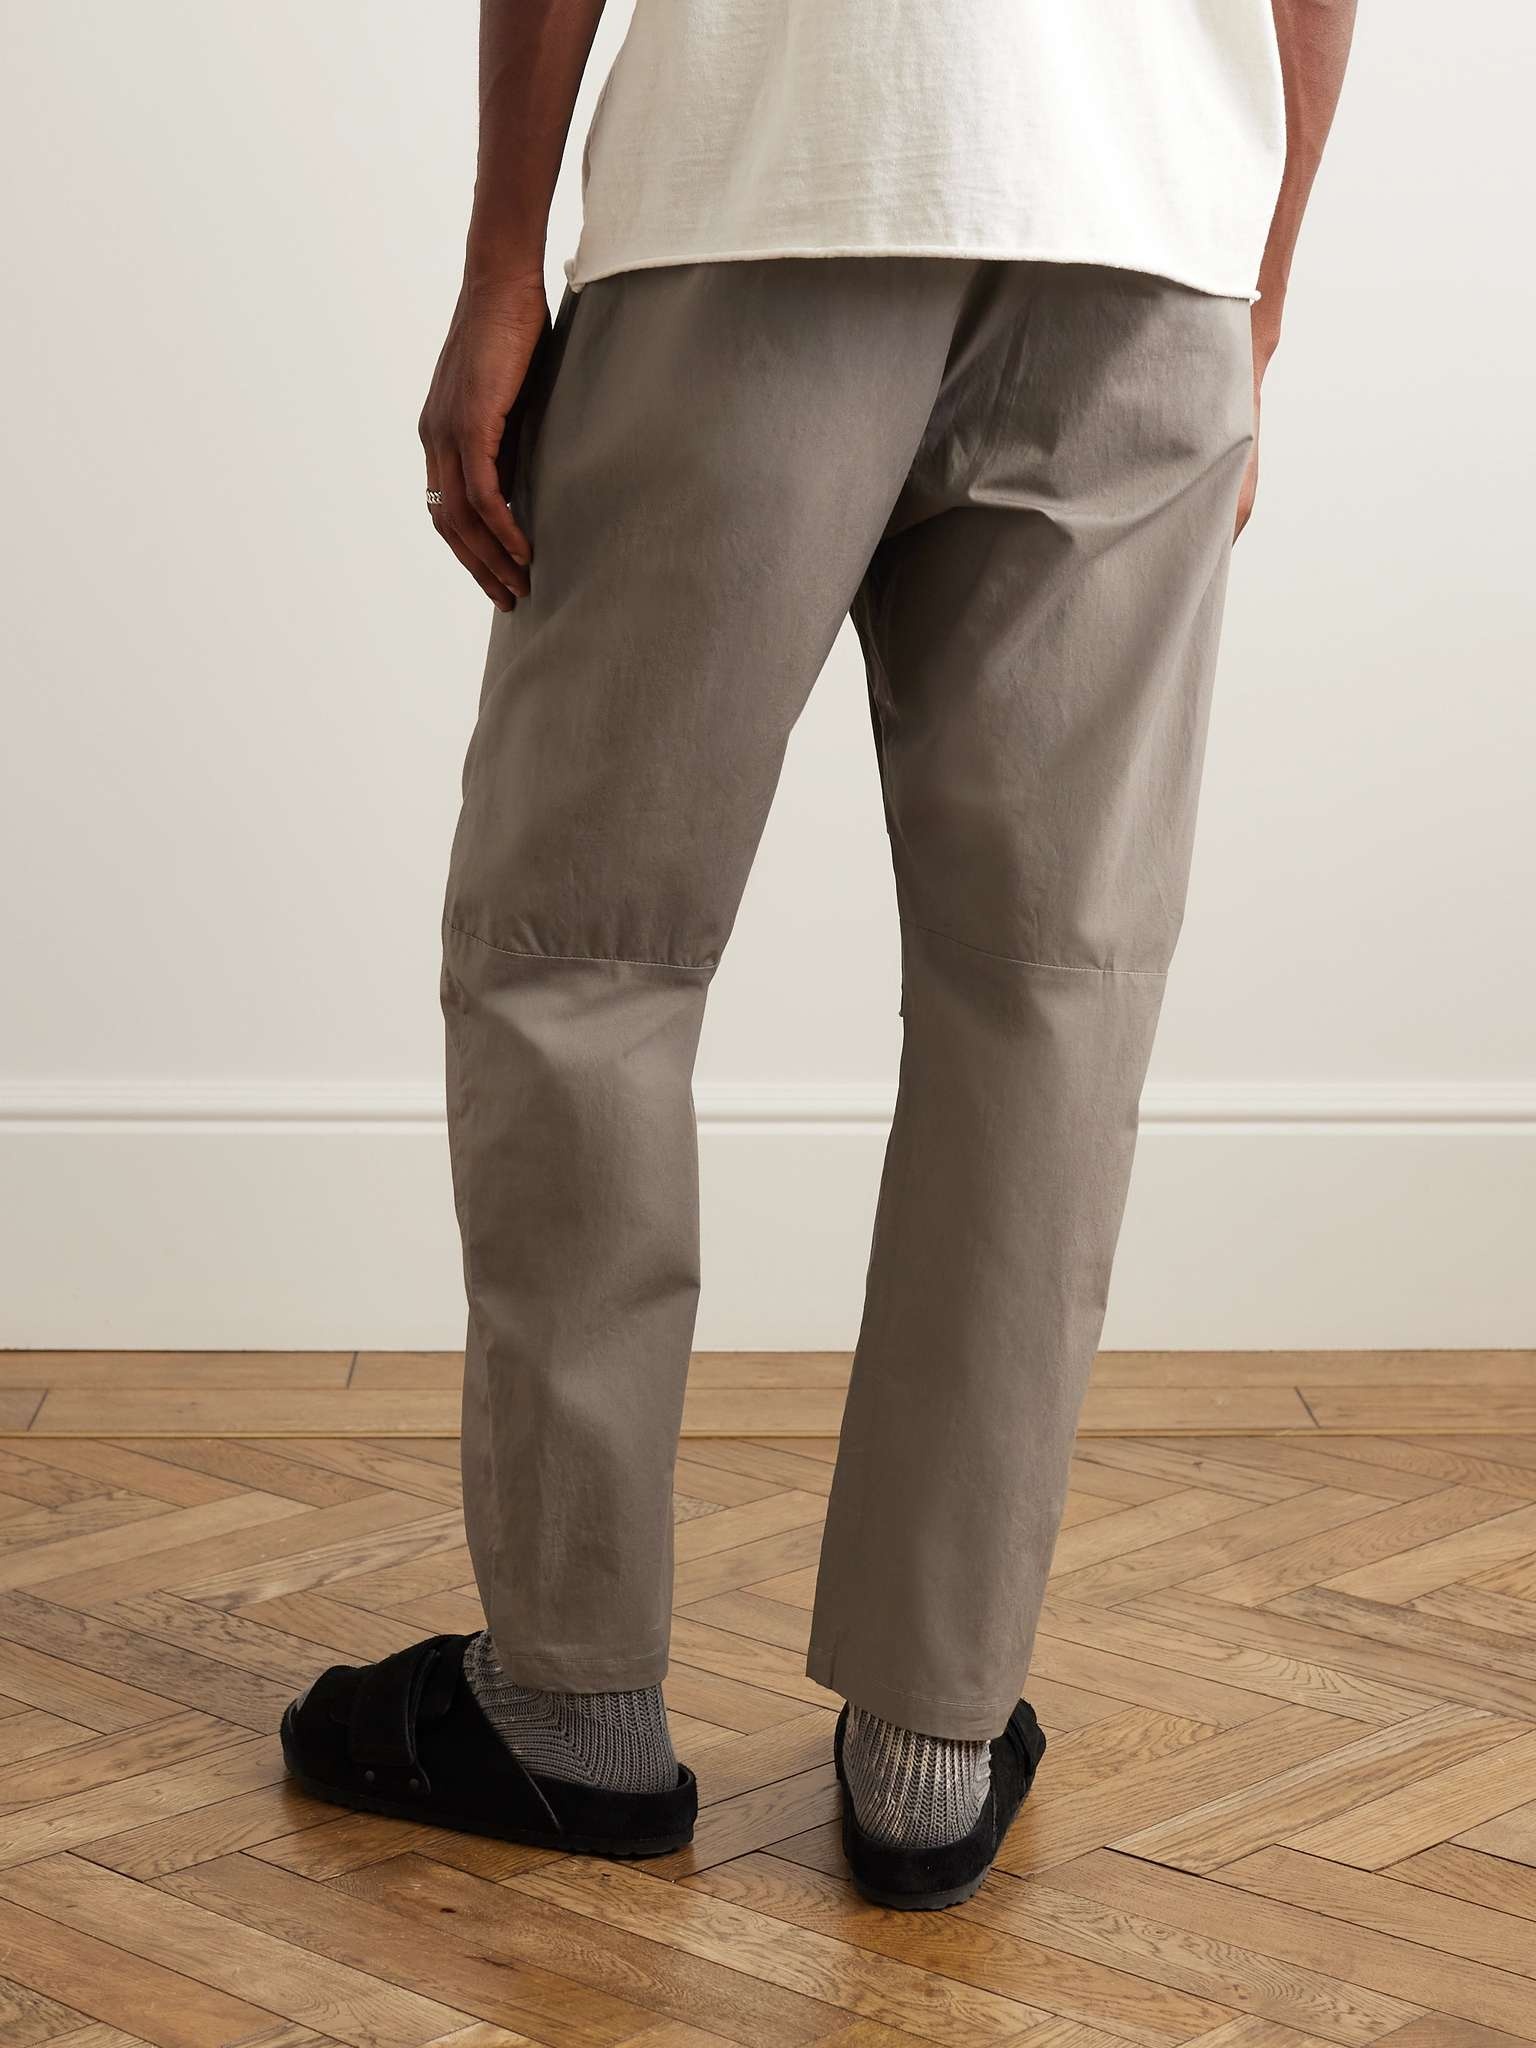 Cotton drawstring trousers